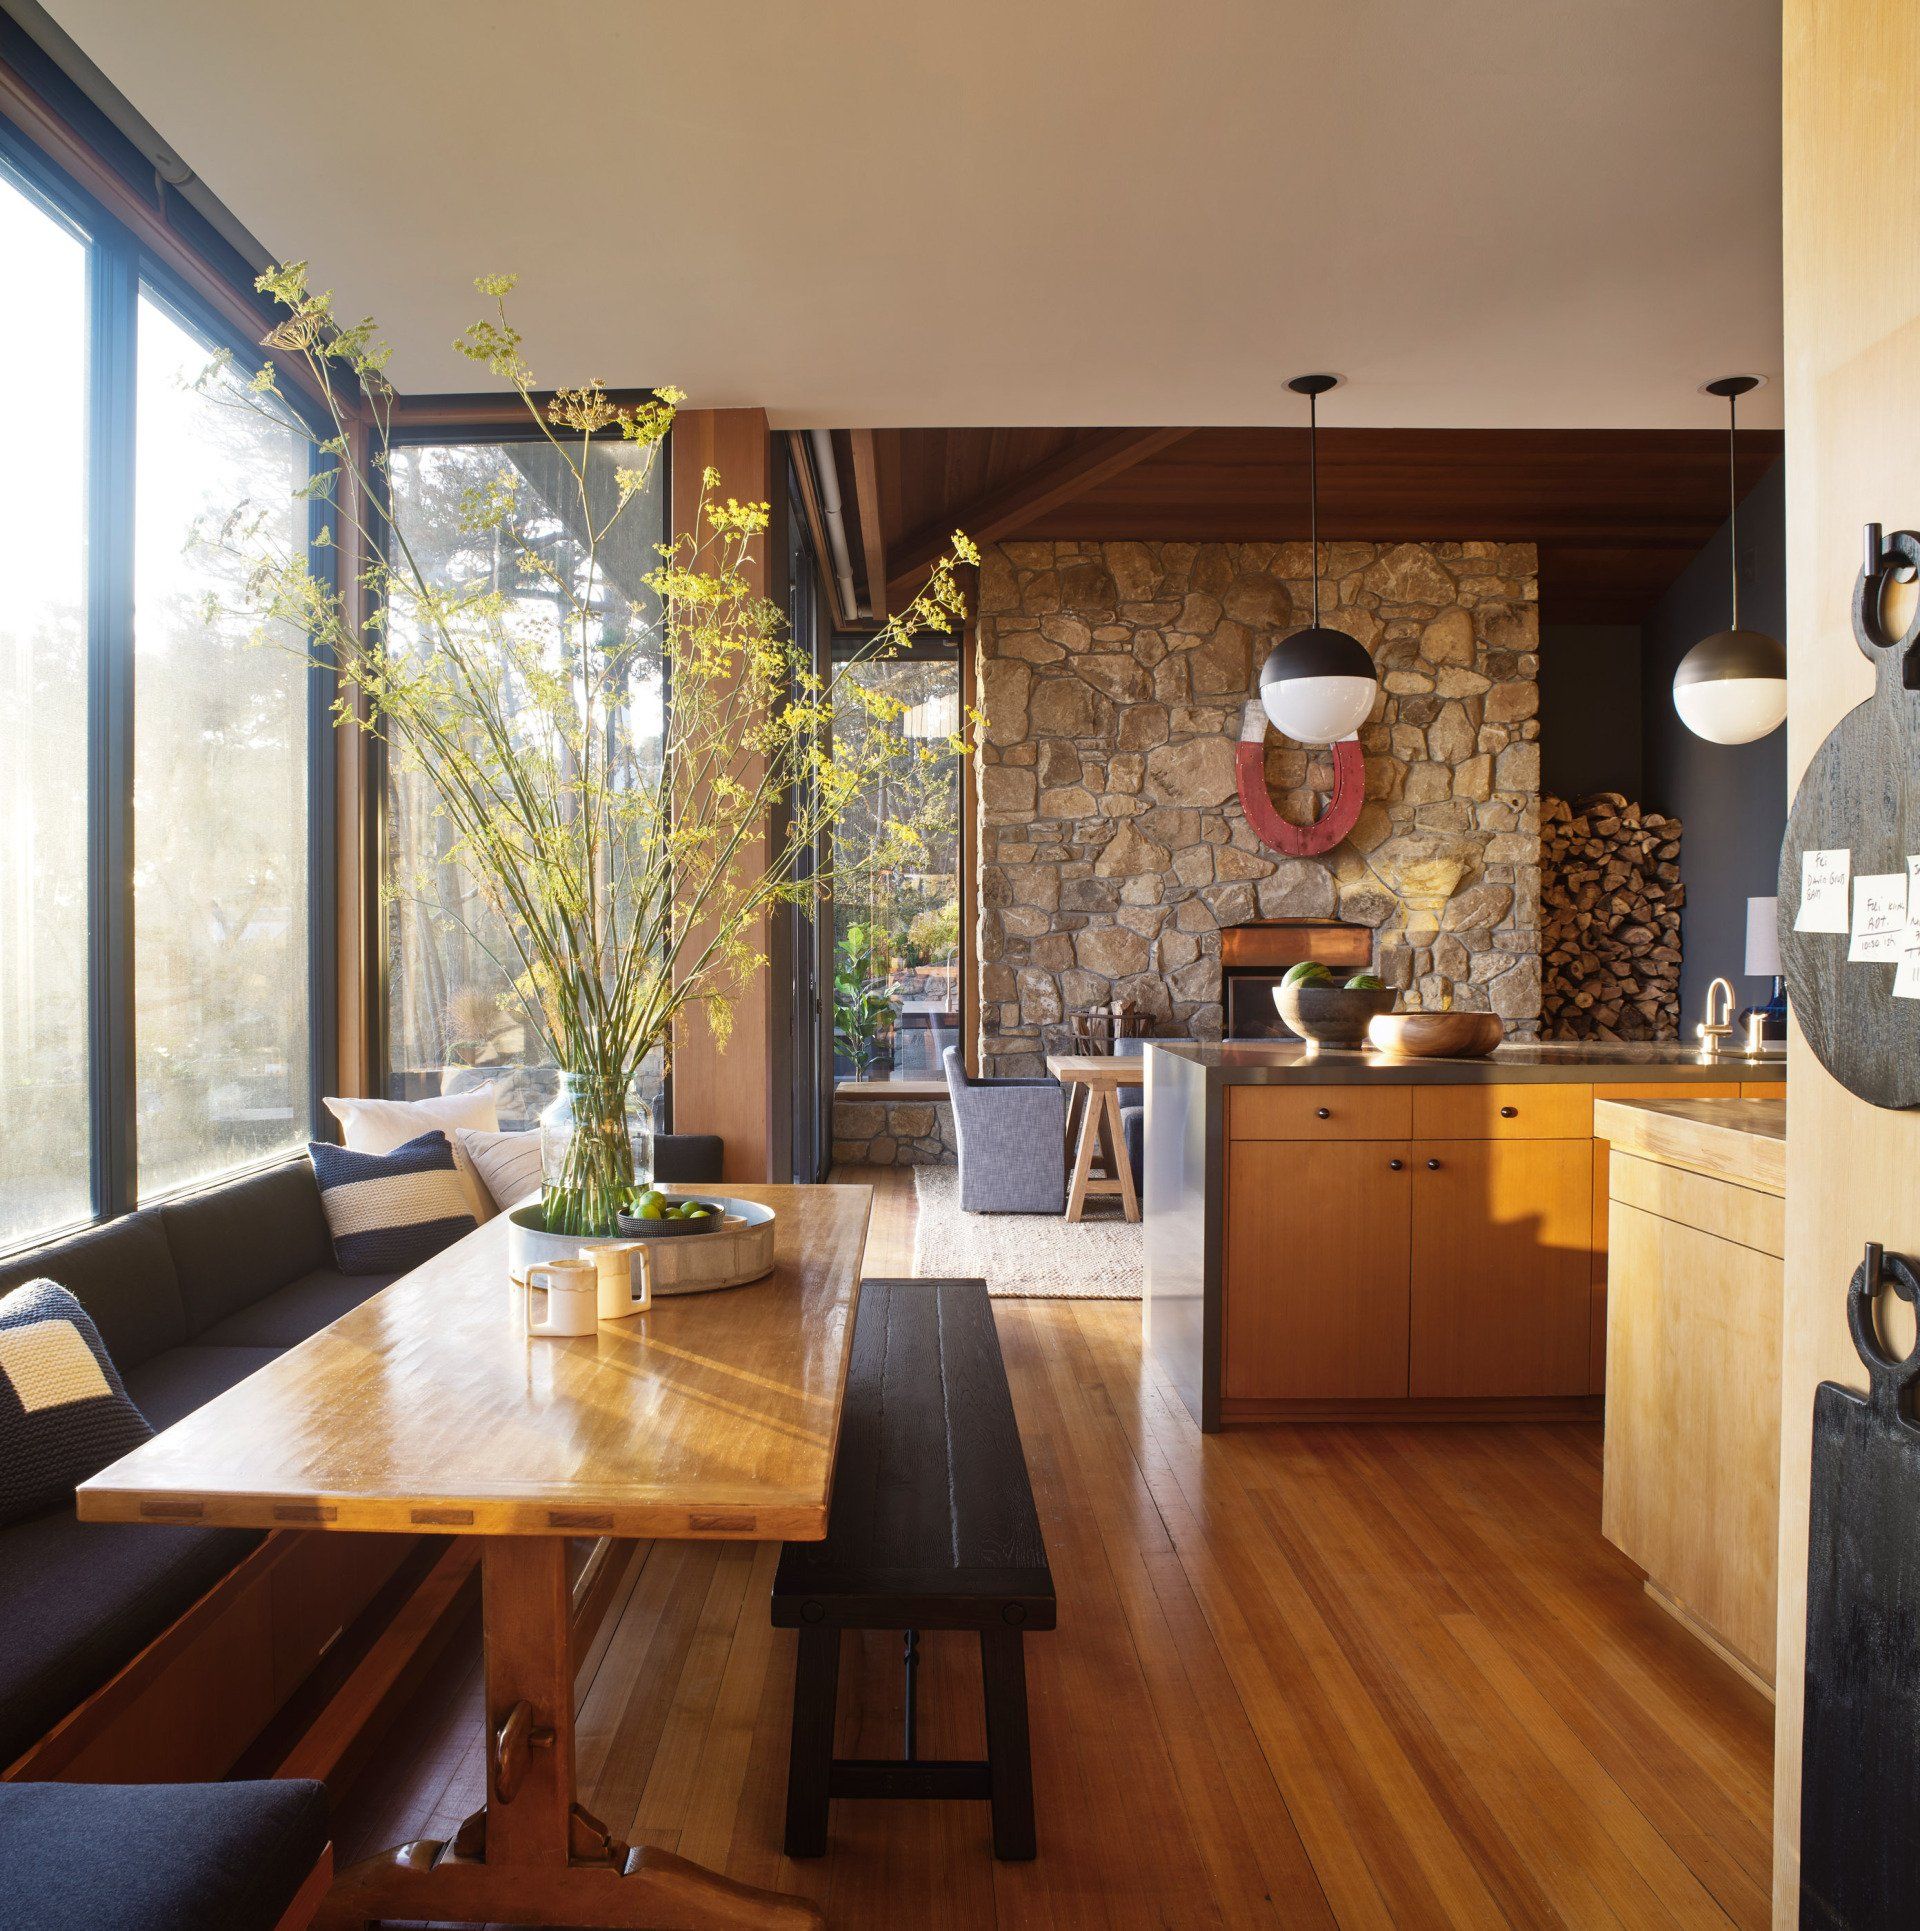 Dining room in a Home in Northern California designed by Dakota DesignWorks